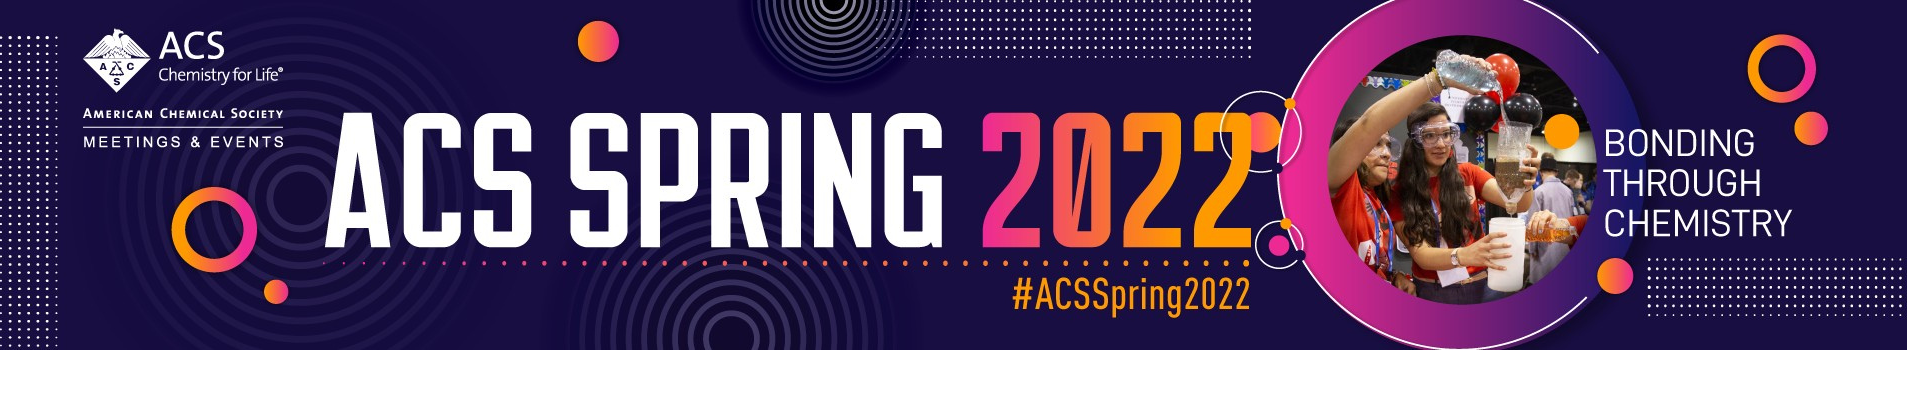 ACS Spring 2022 banner 